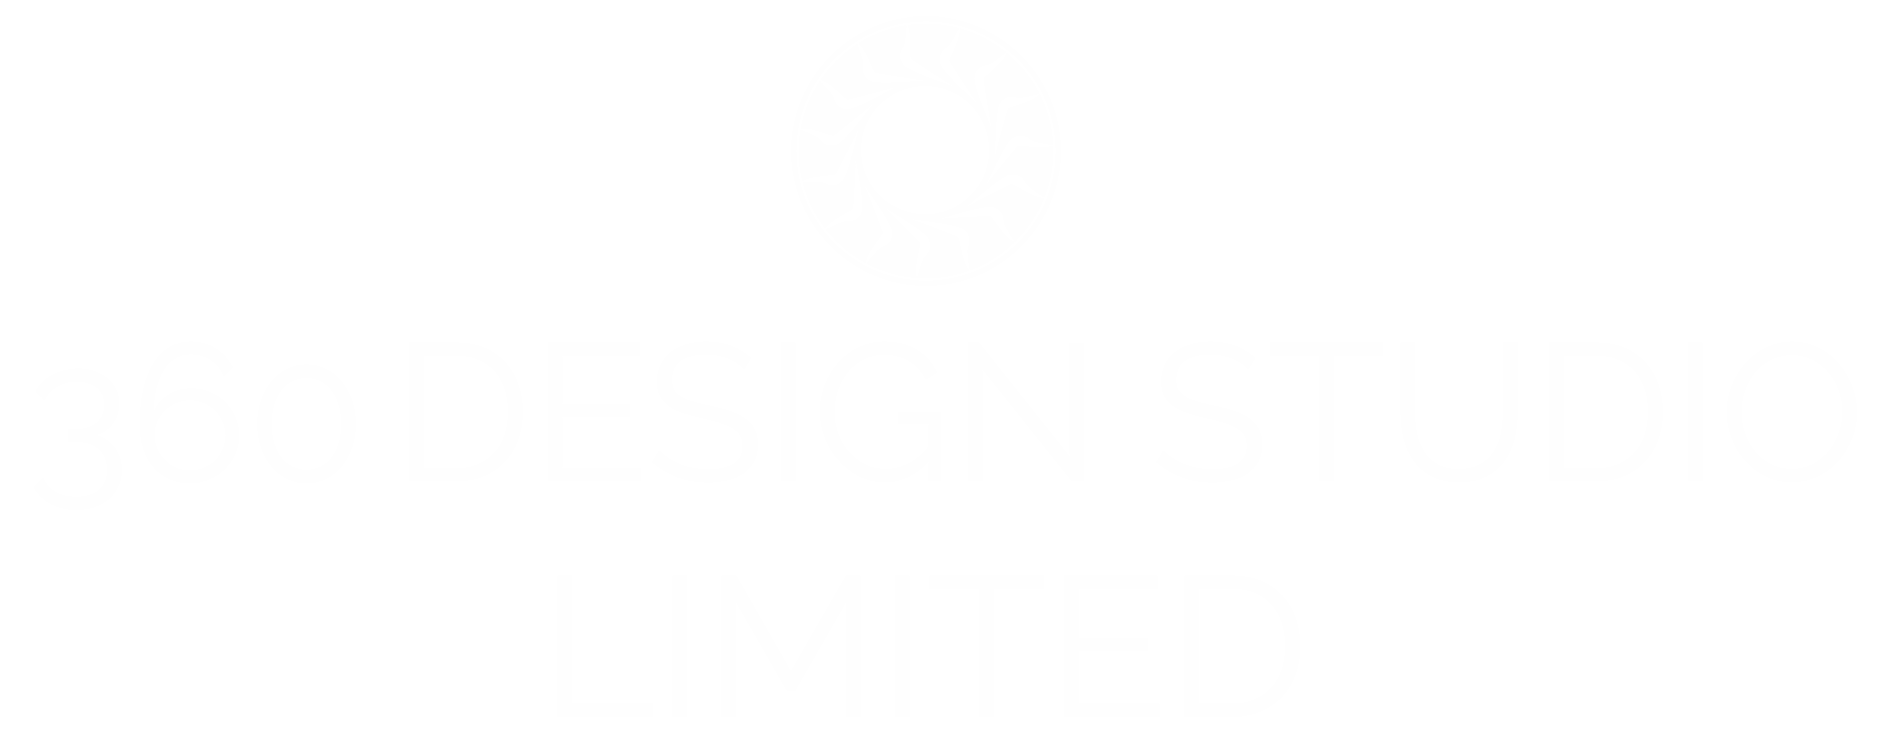 360 Design Studio Limited